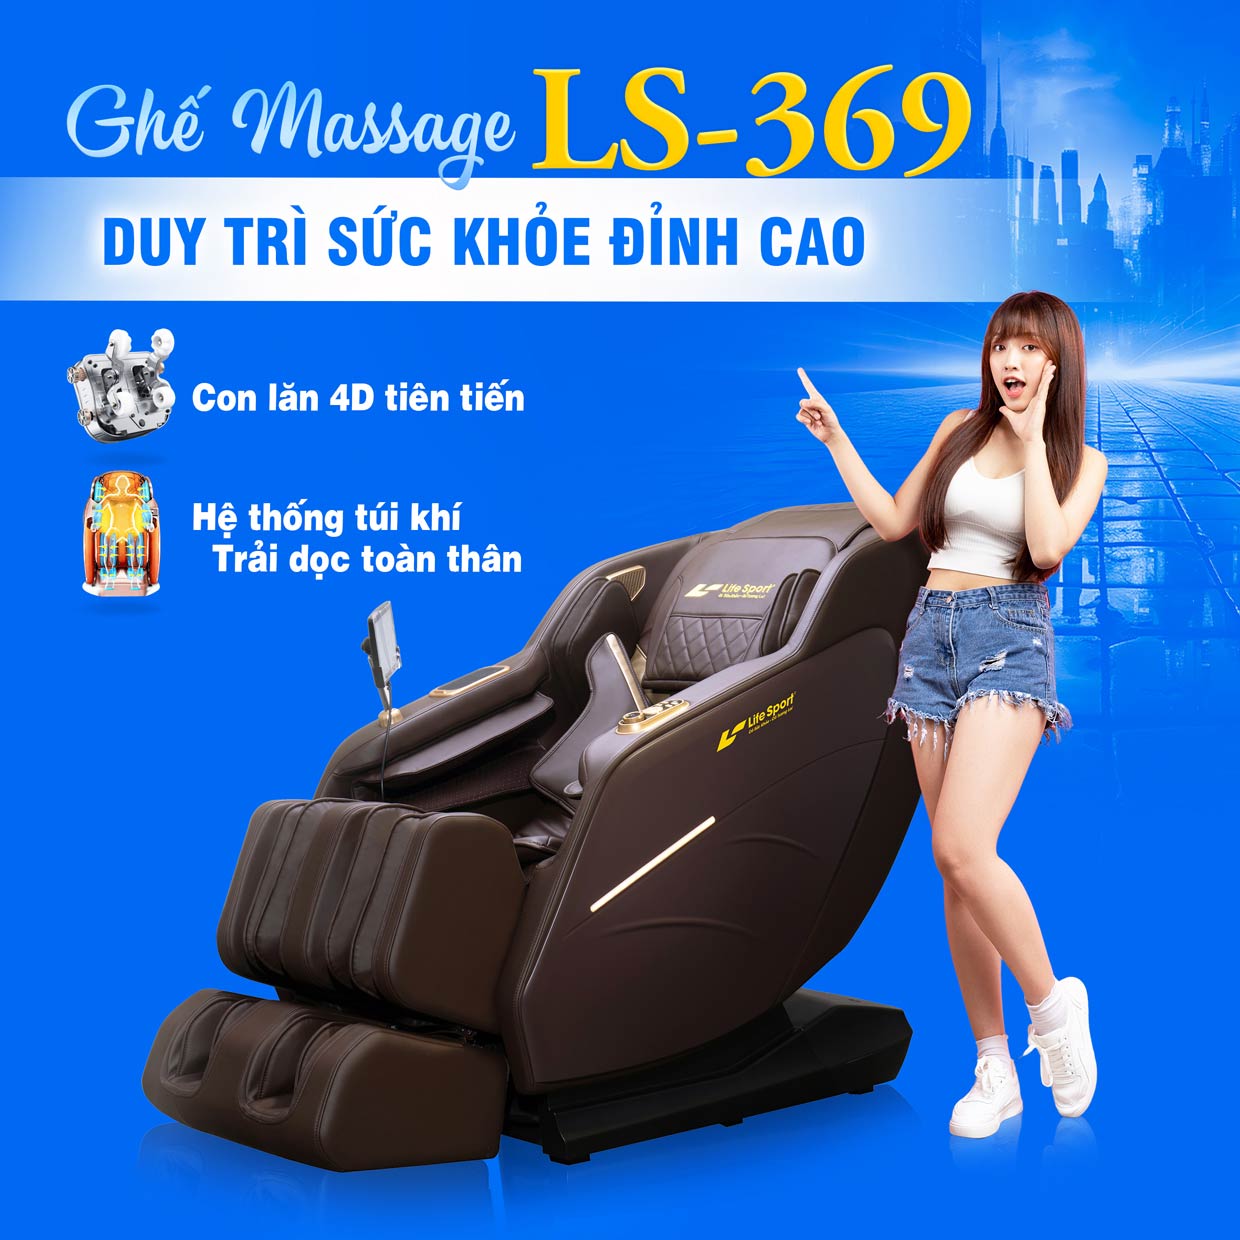 ghe massage lifesport ls 369 1 2